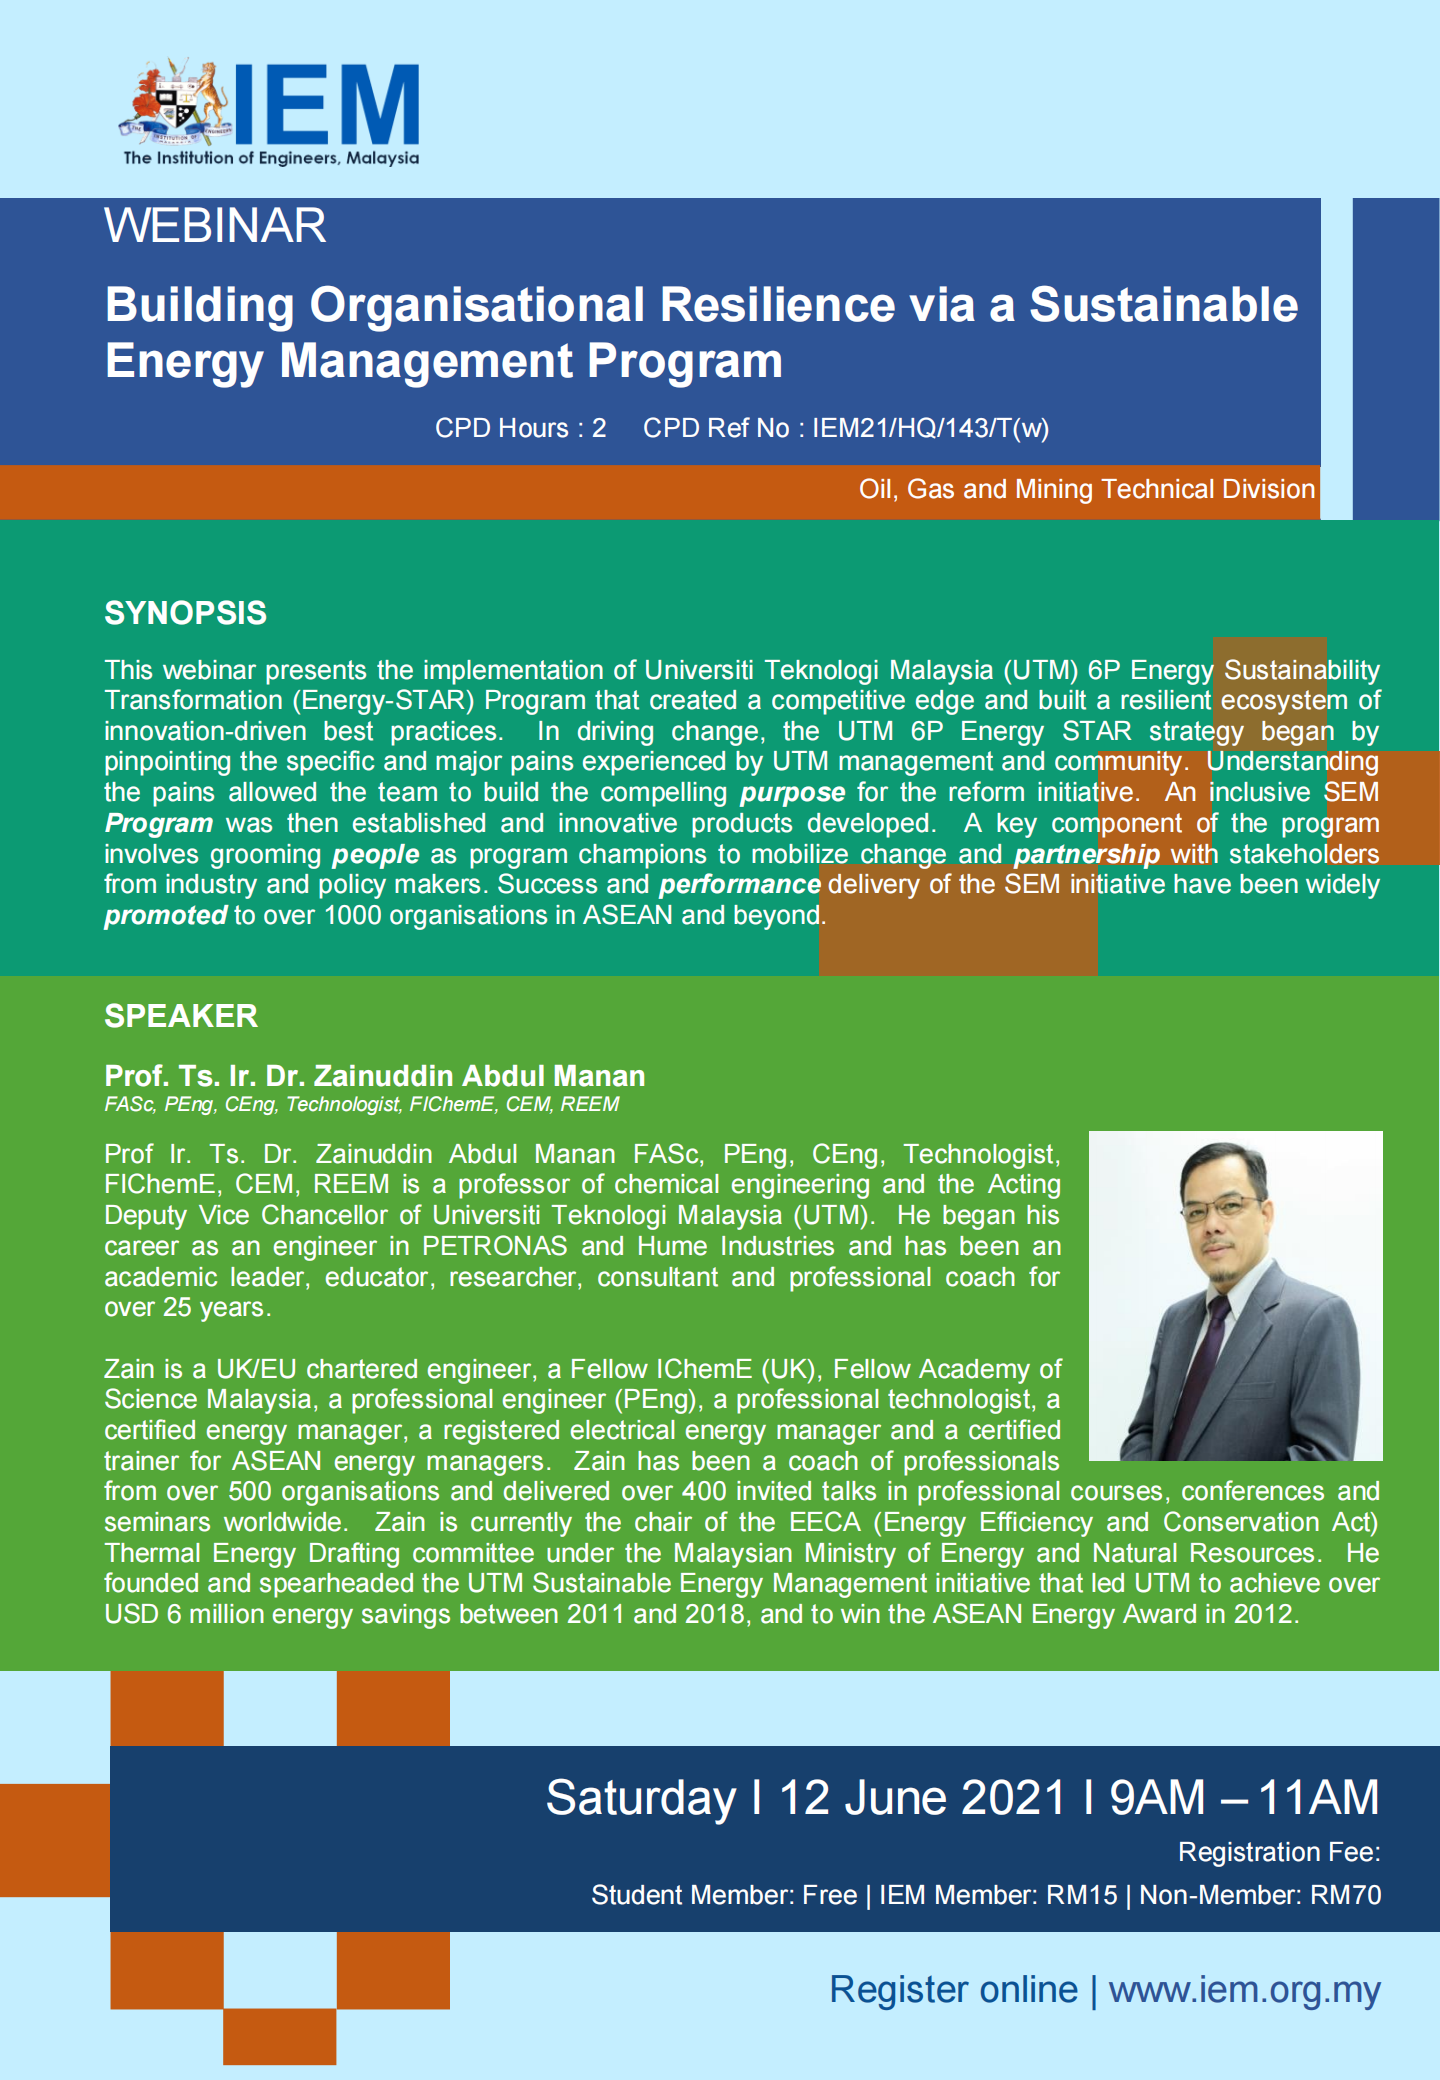 IEM WEBINAR (12 Jun 2021) - Building Organizational Resilience via a Sustainable Energy Management Program 52